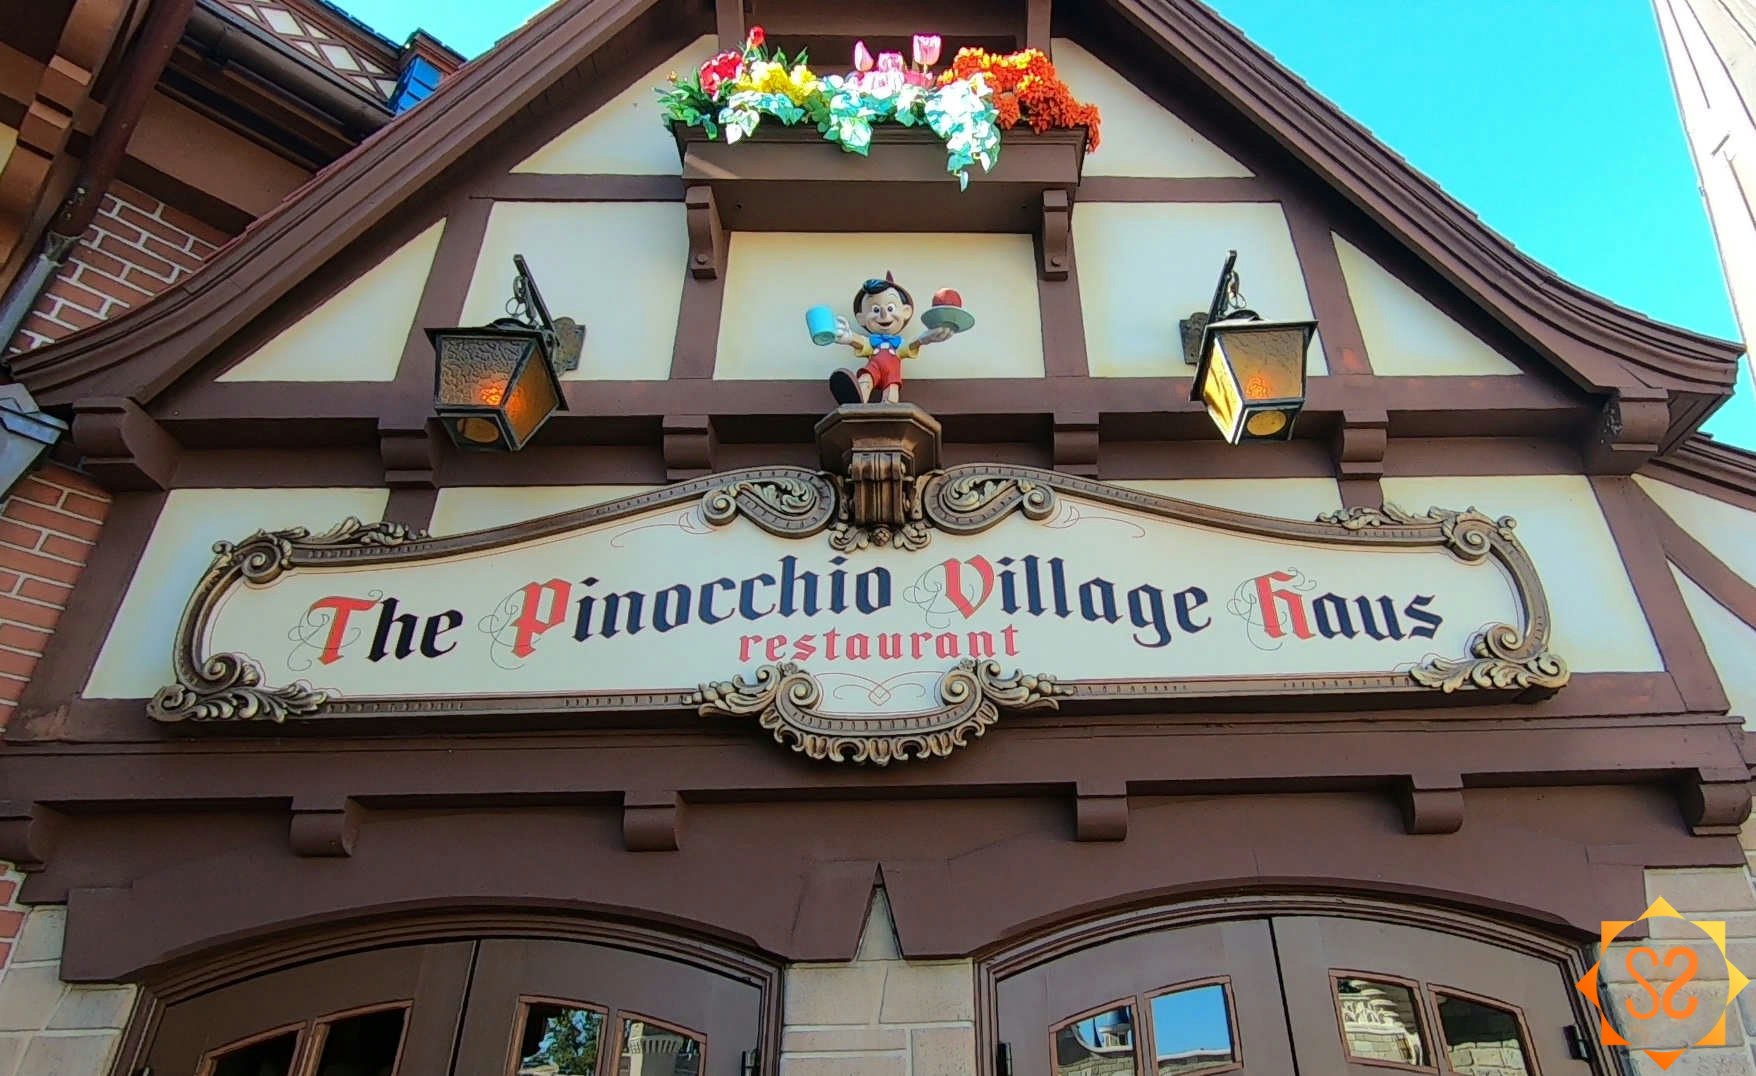 The outside of the Pinocchio Village Haus restaurant at Walt Disney World